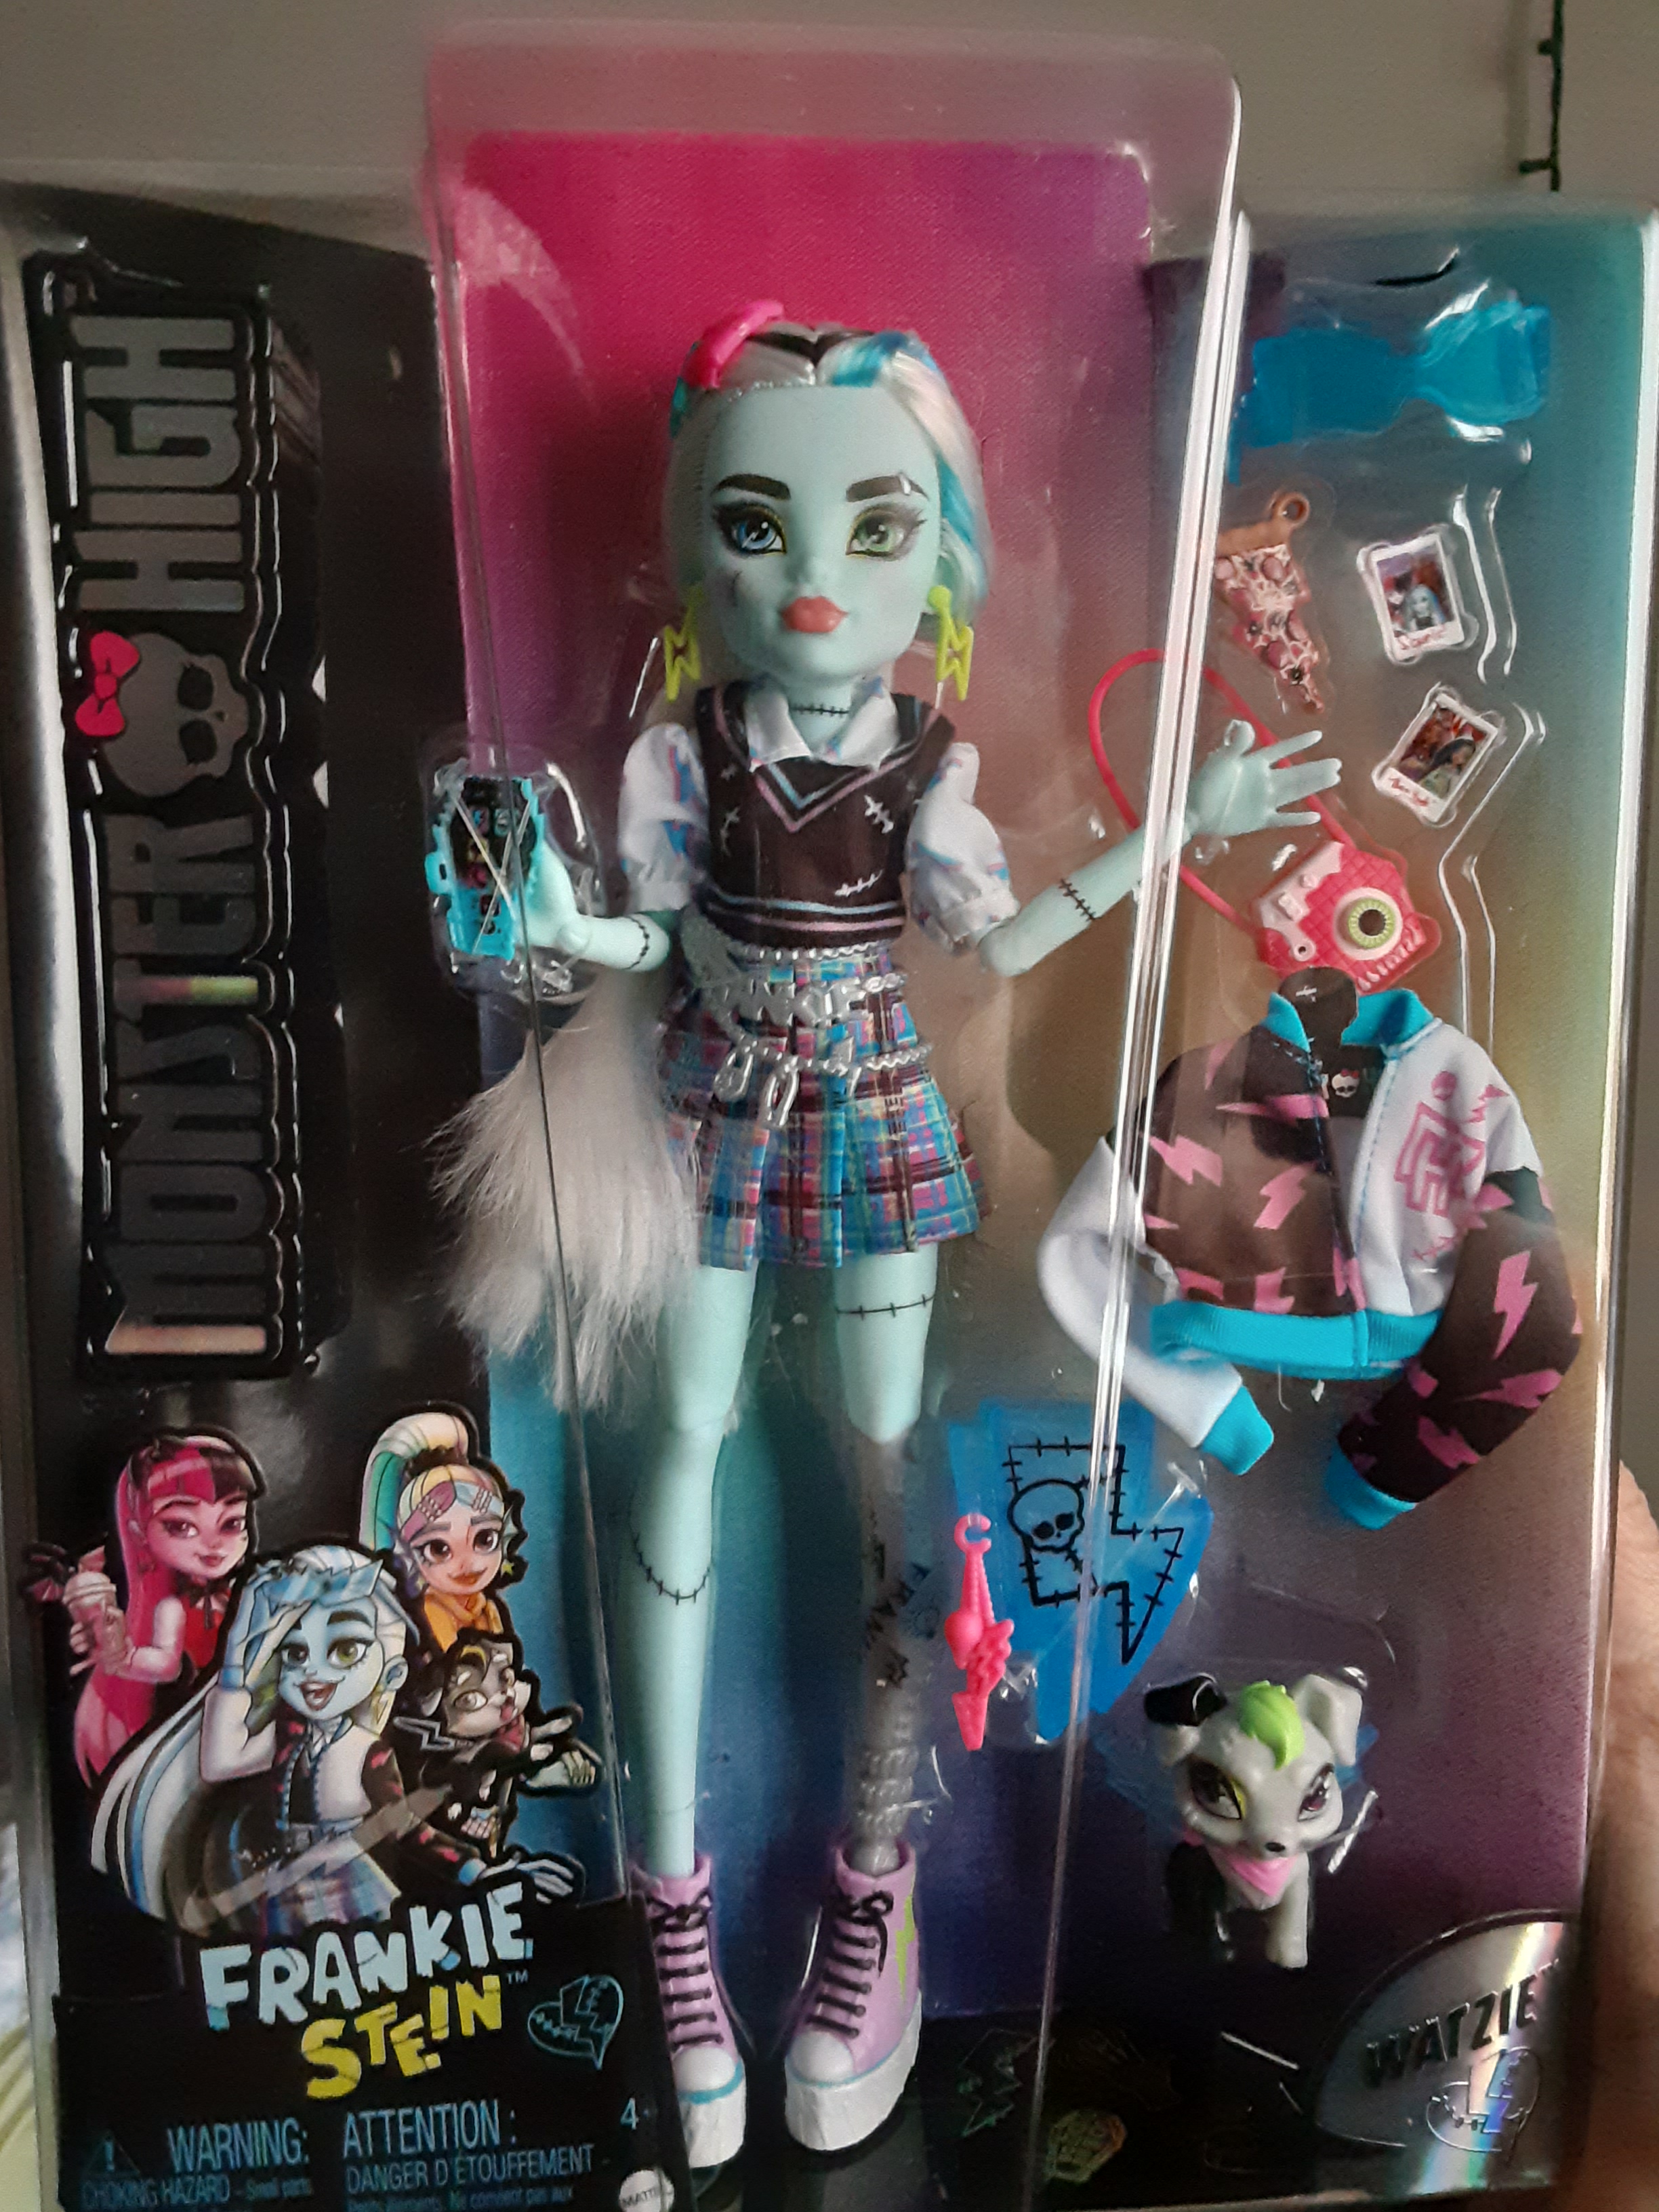 Monster High G3 International Exclusive Budget Monsteristas Frankie Stein  doll review! 